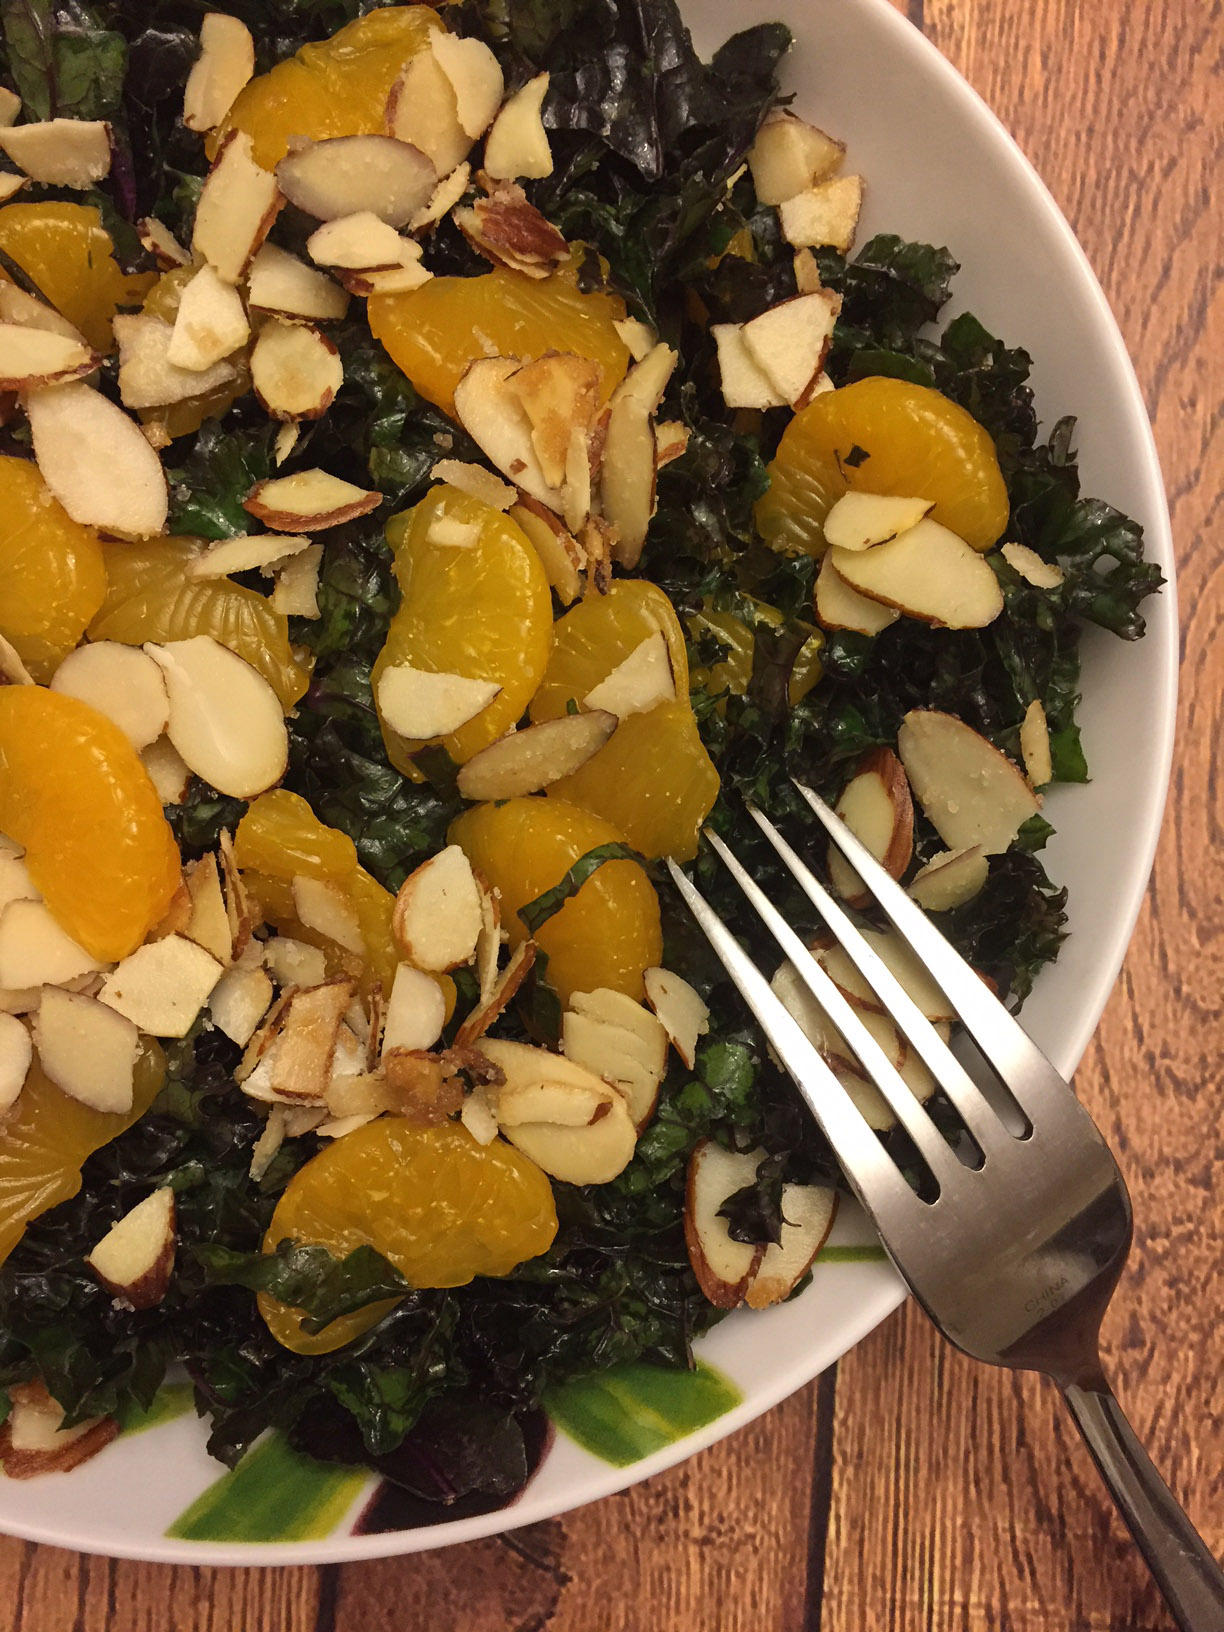 Red Kale Salad Recipe With Orange Slices And Slivered Almonds